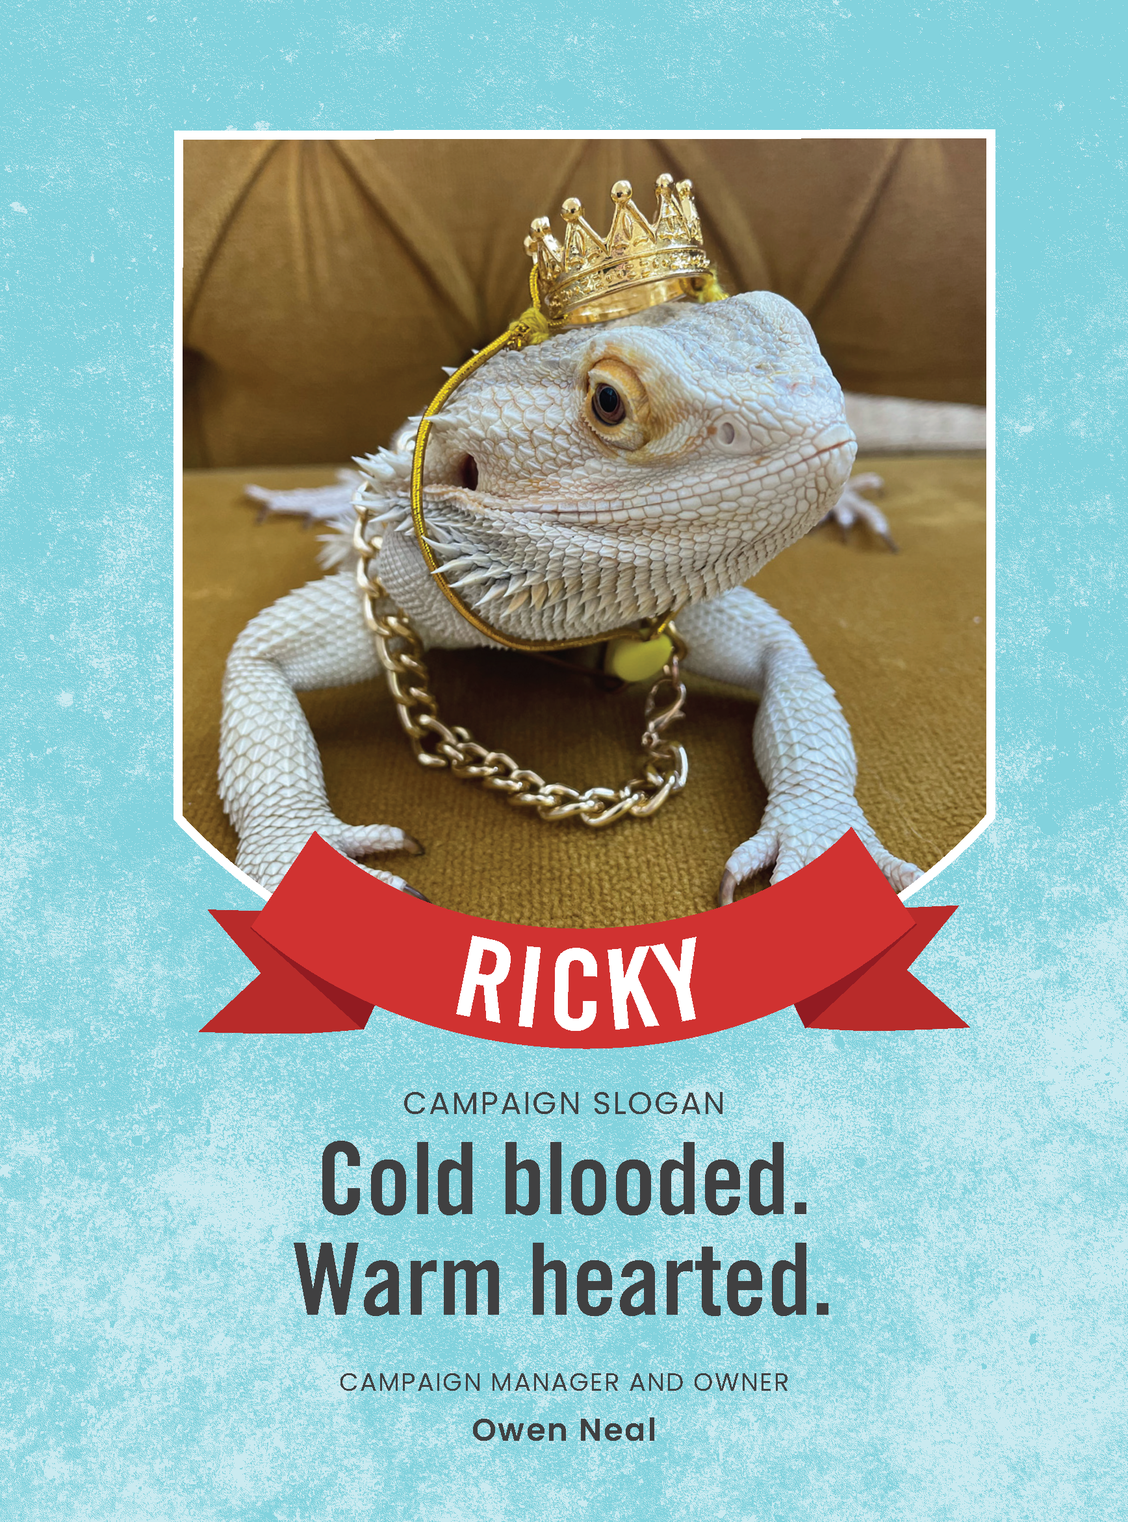 Vote for Ricky!